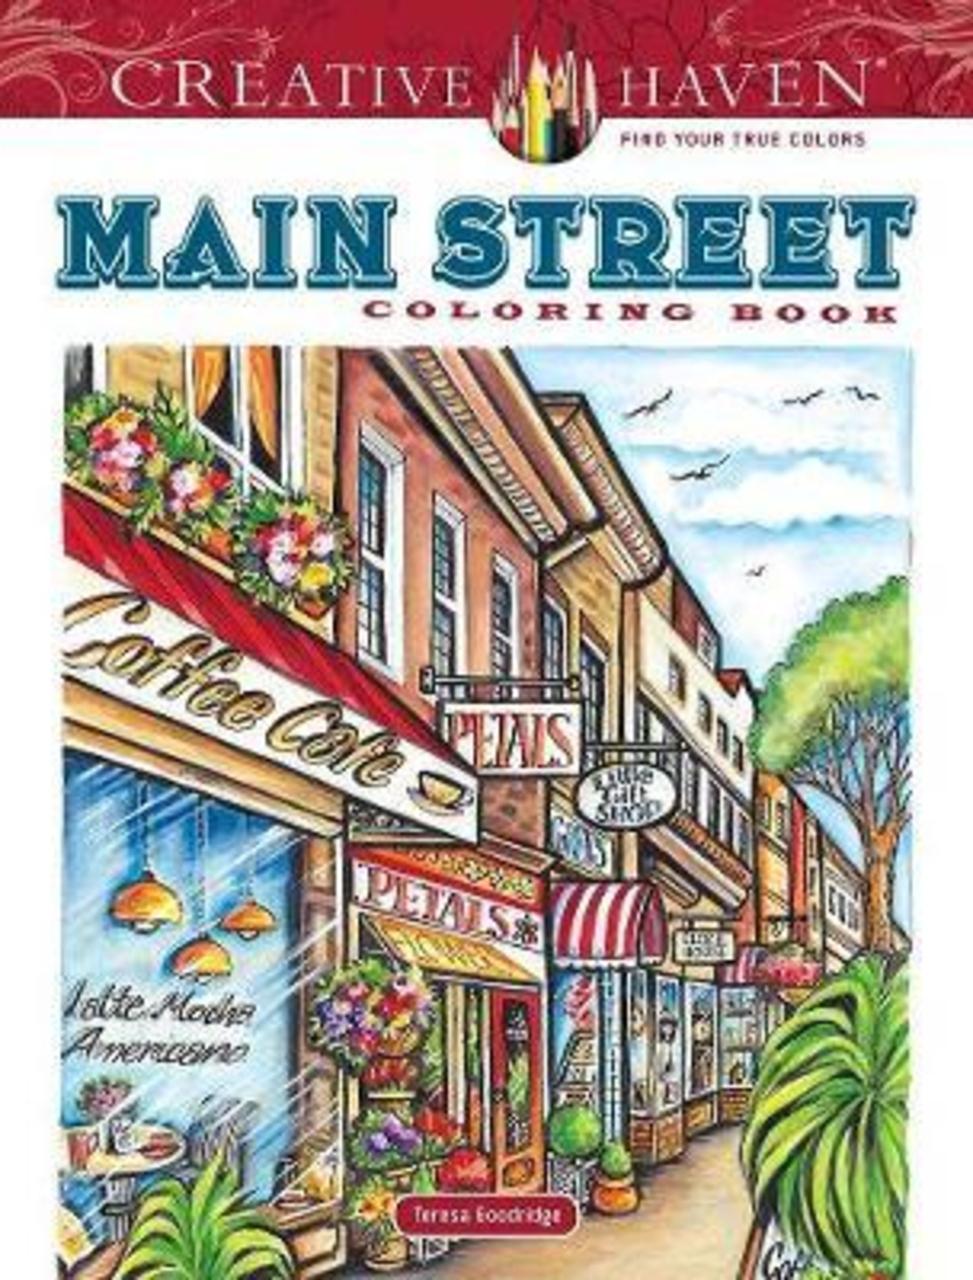 Sách - Creative Haven Main Street Coloring Book by Teresa Goodridge (US edition, paperback)